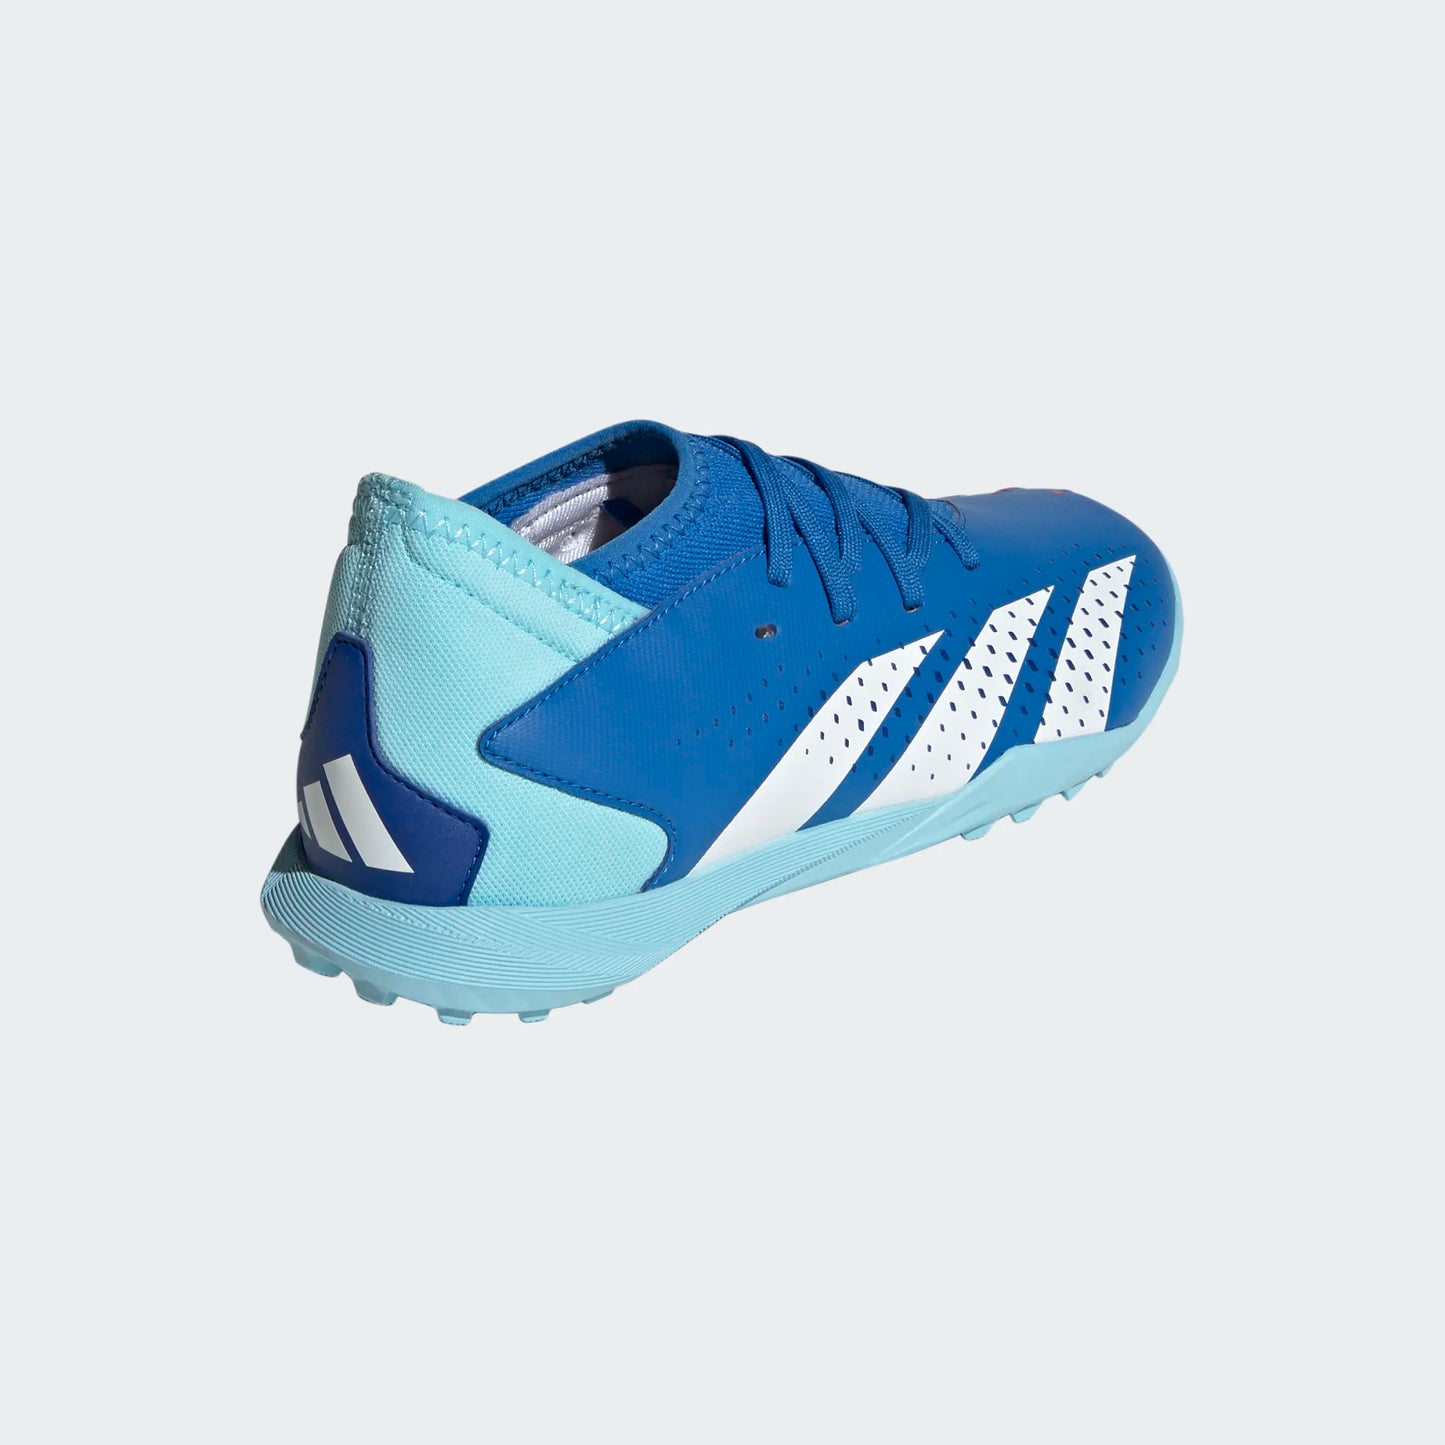 adidas Predator Accuracy.3 Youth Soccer Turf Shoes Blue